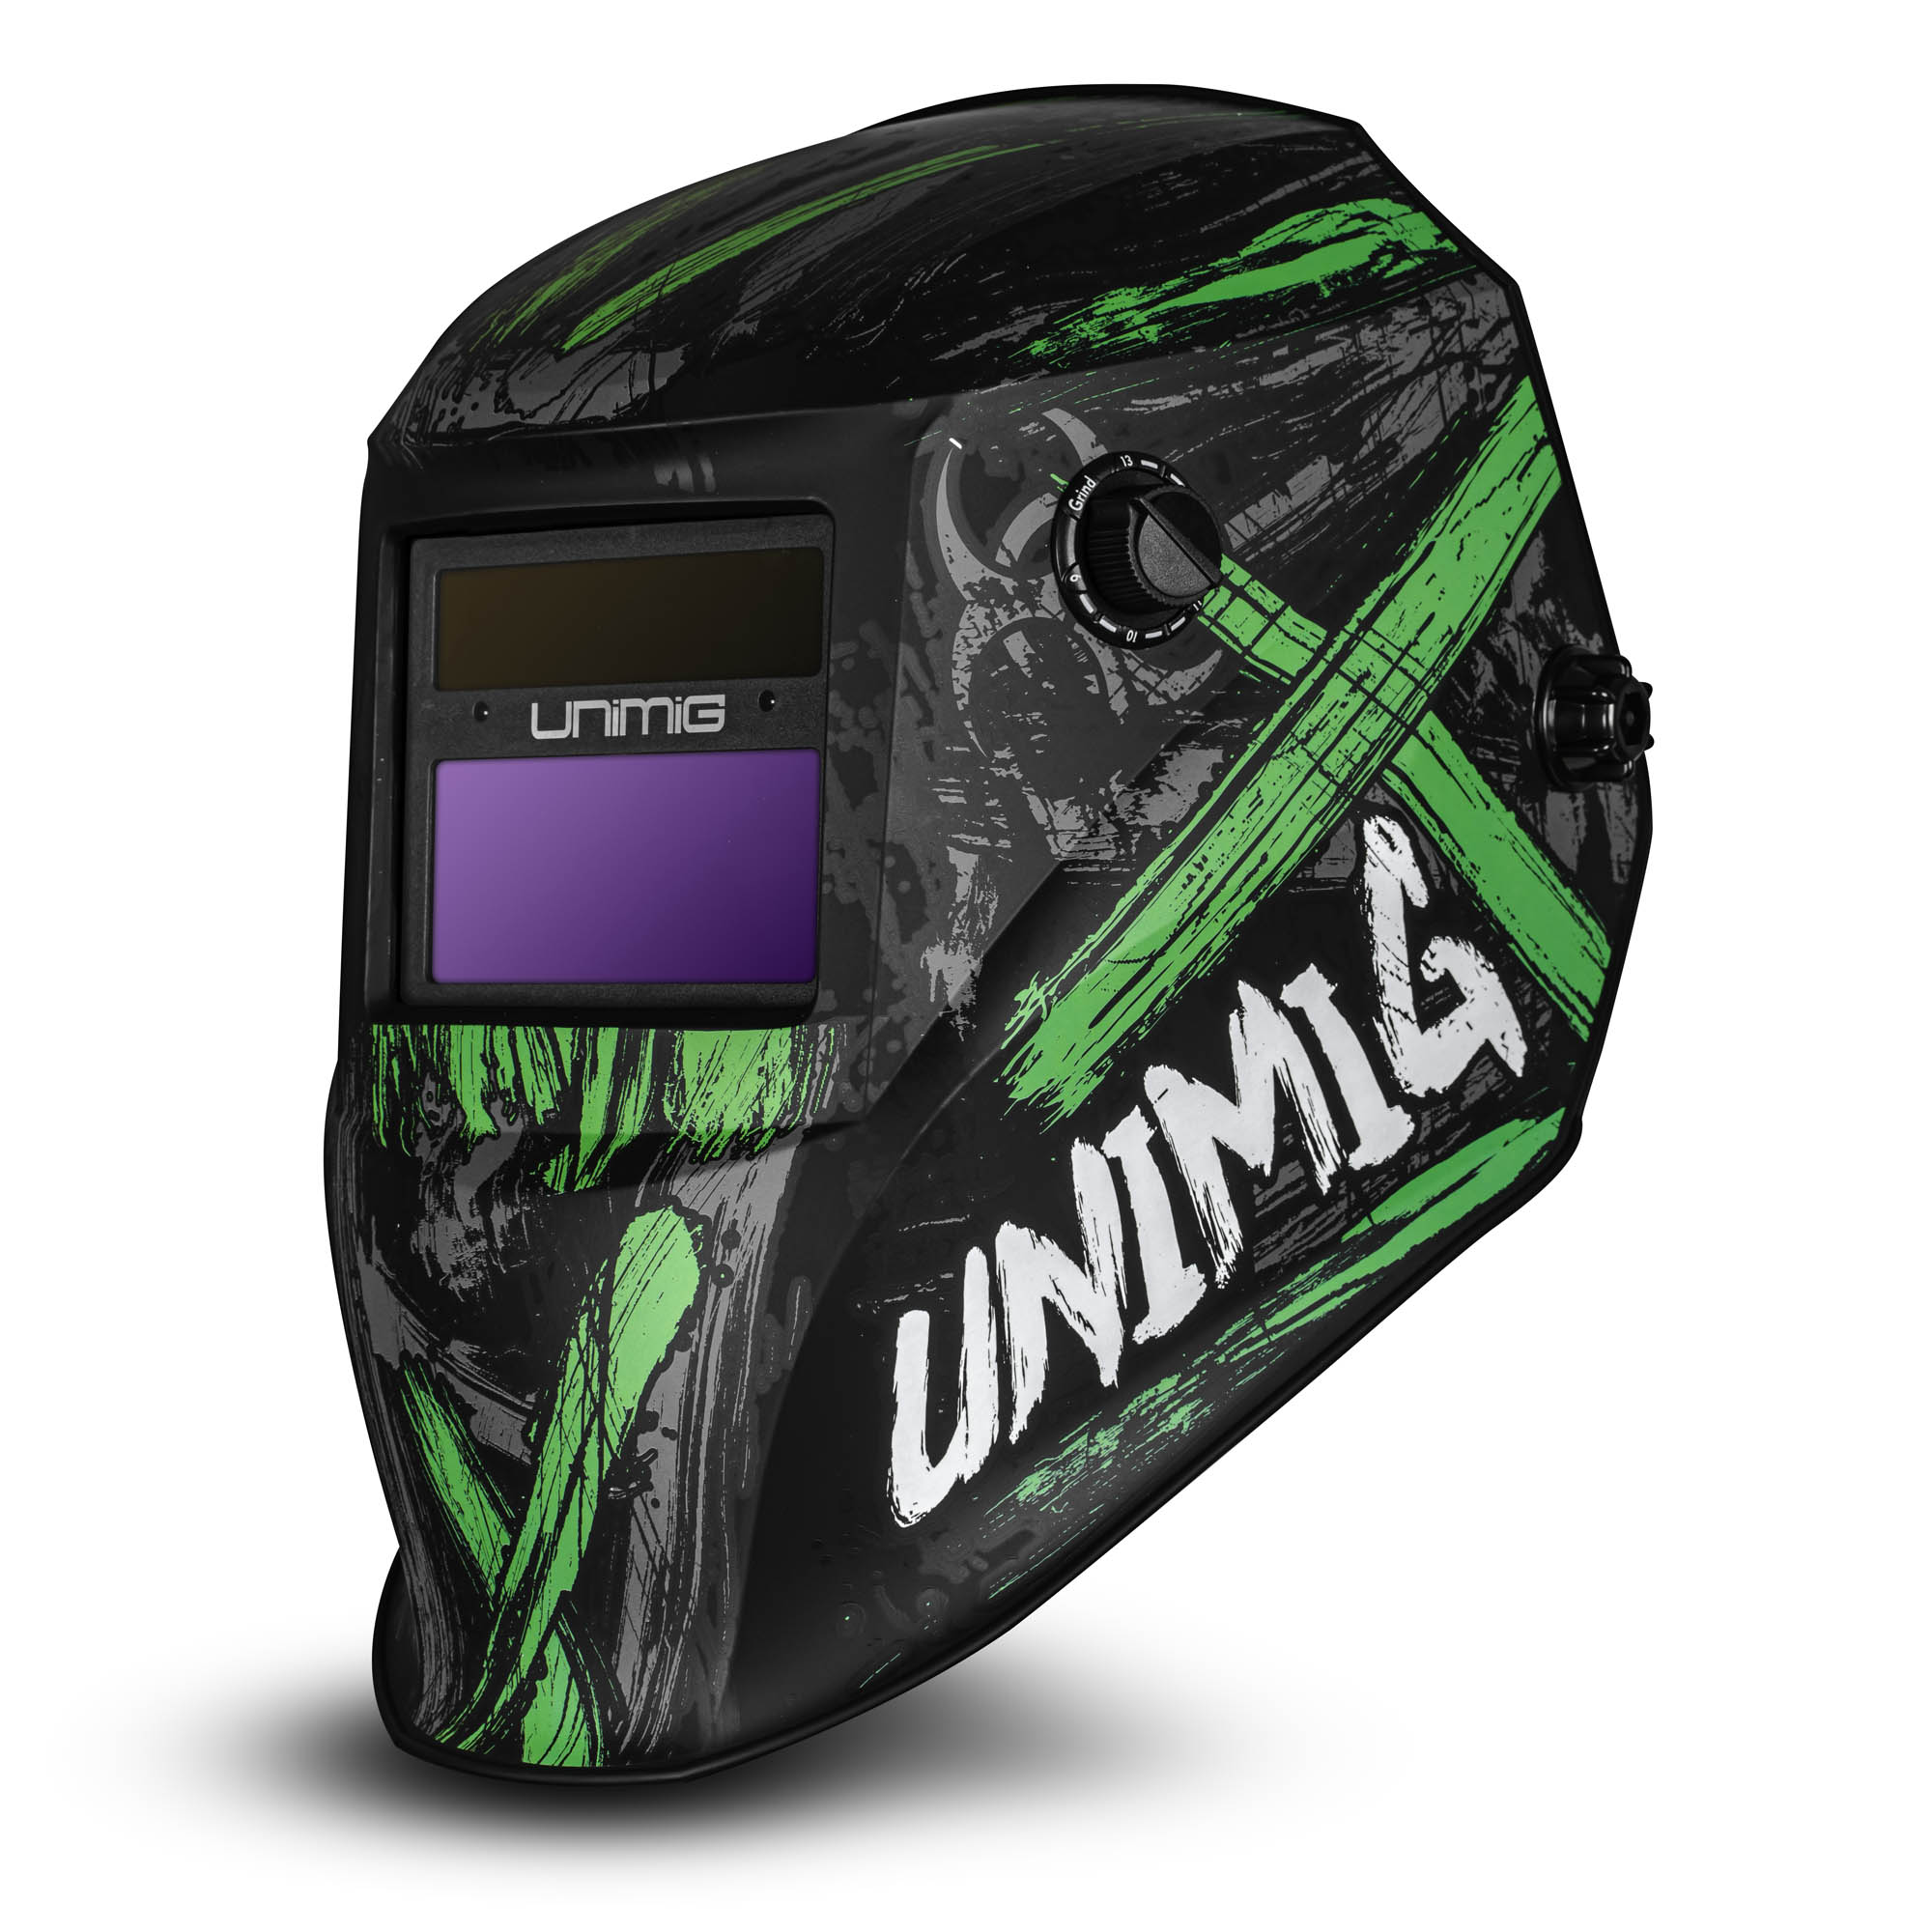 Unimig UMTWH Welding Helmet TOXIC - GasRep.com.au